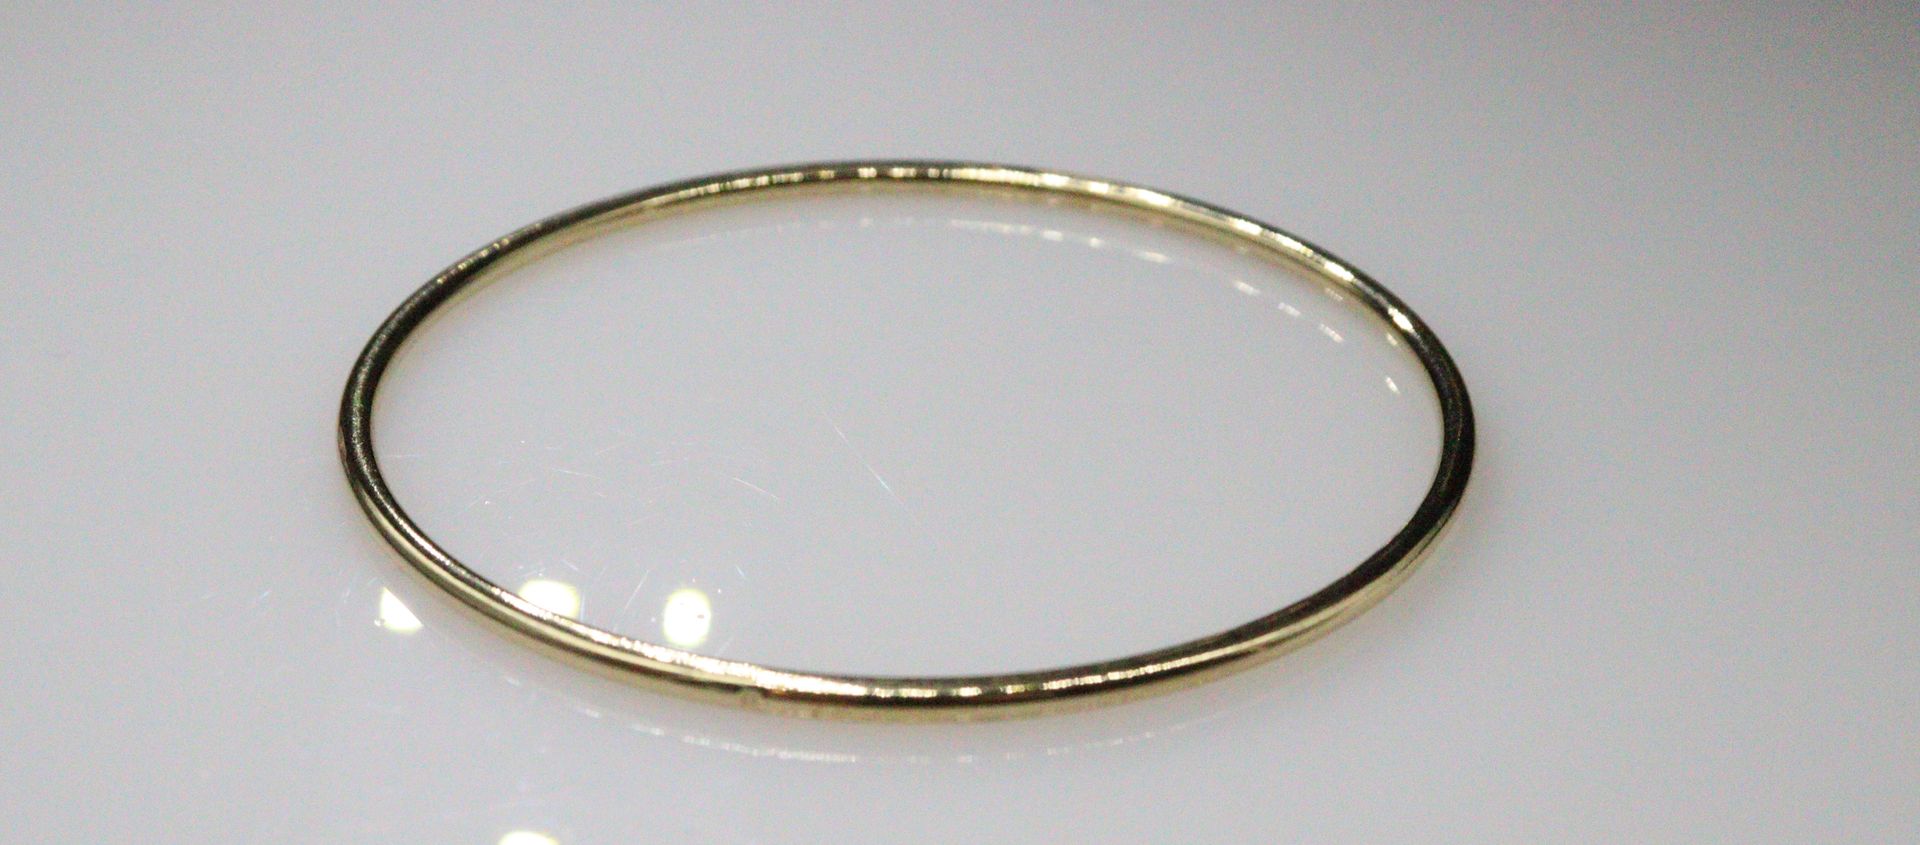 Null Armreif aus vergoldetem Metall.
Durchmesser: ca. 65 cm